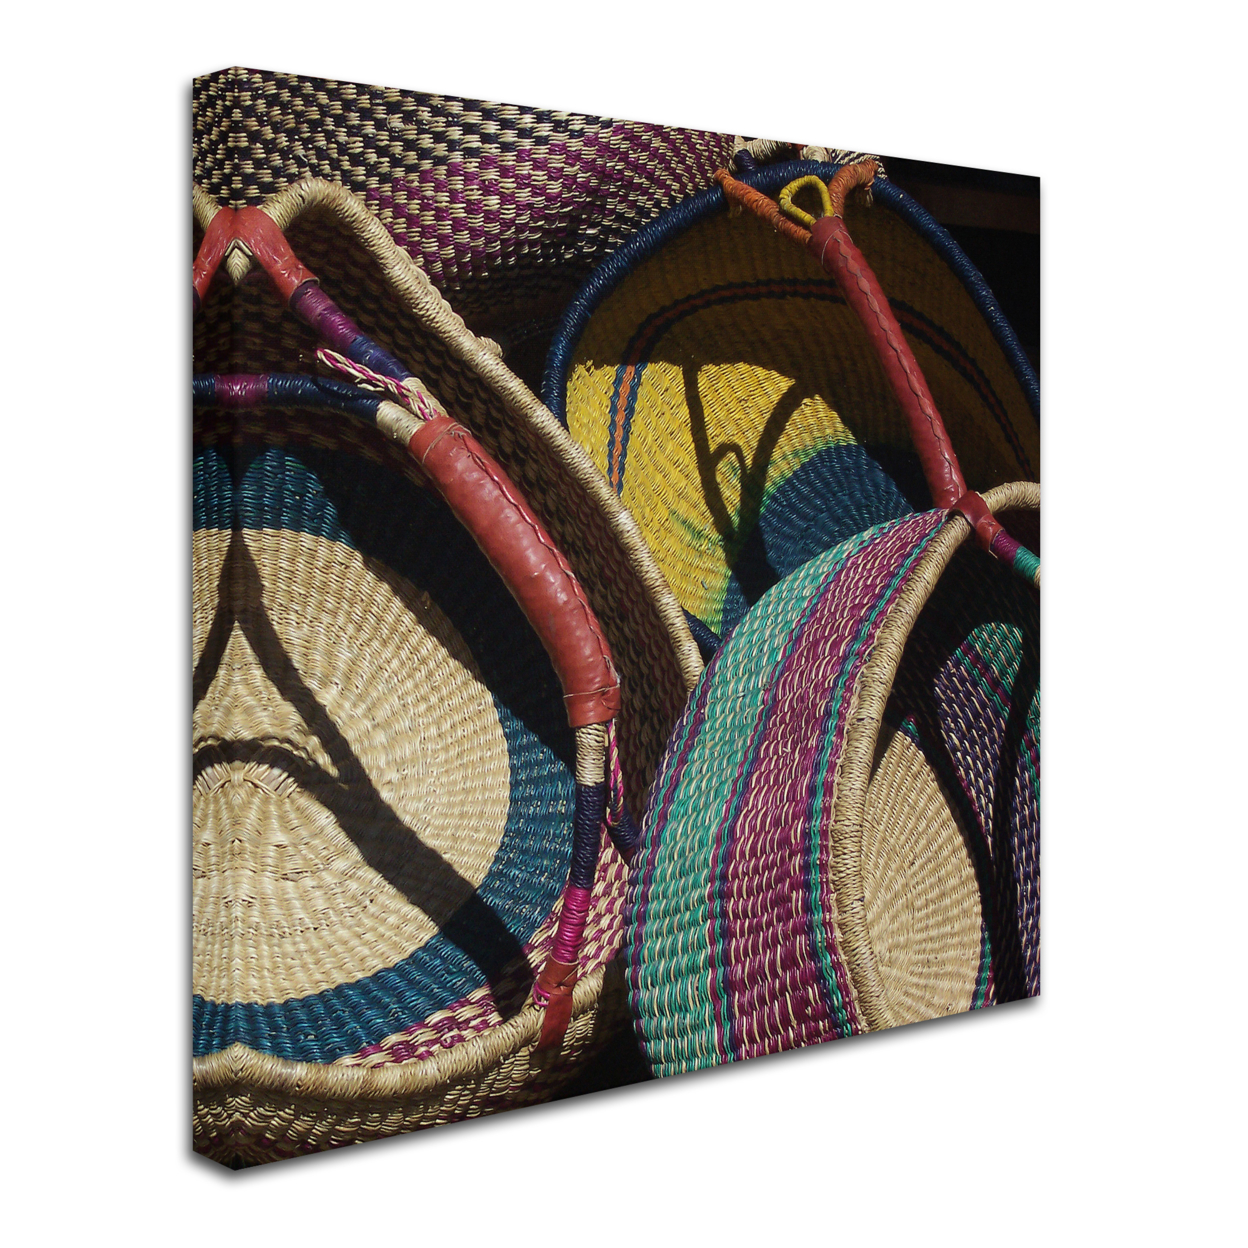 Pat Saunders-White 'Cheyenne Baskets' Huge Canvas Art 35 X 35